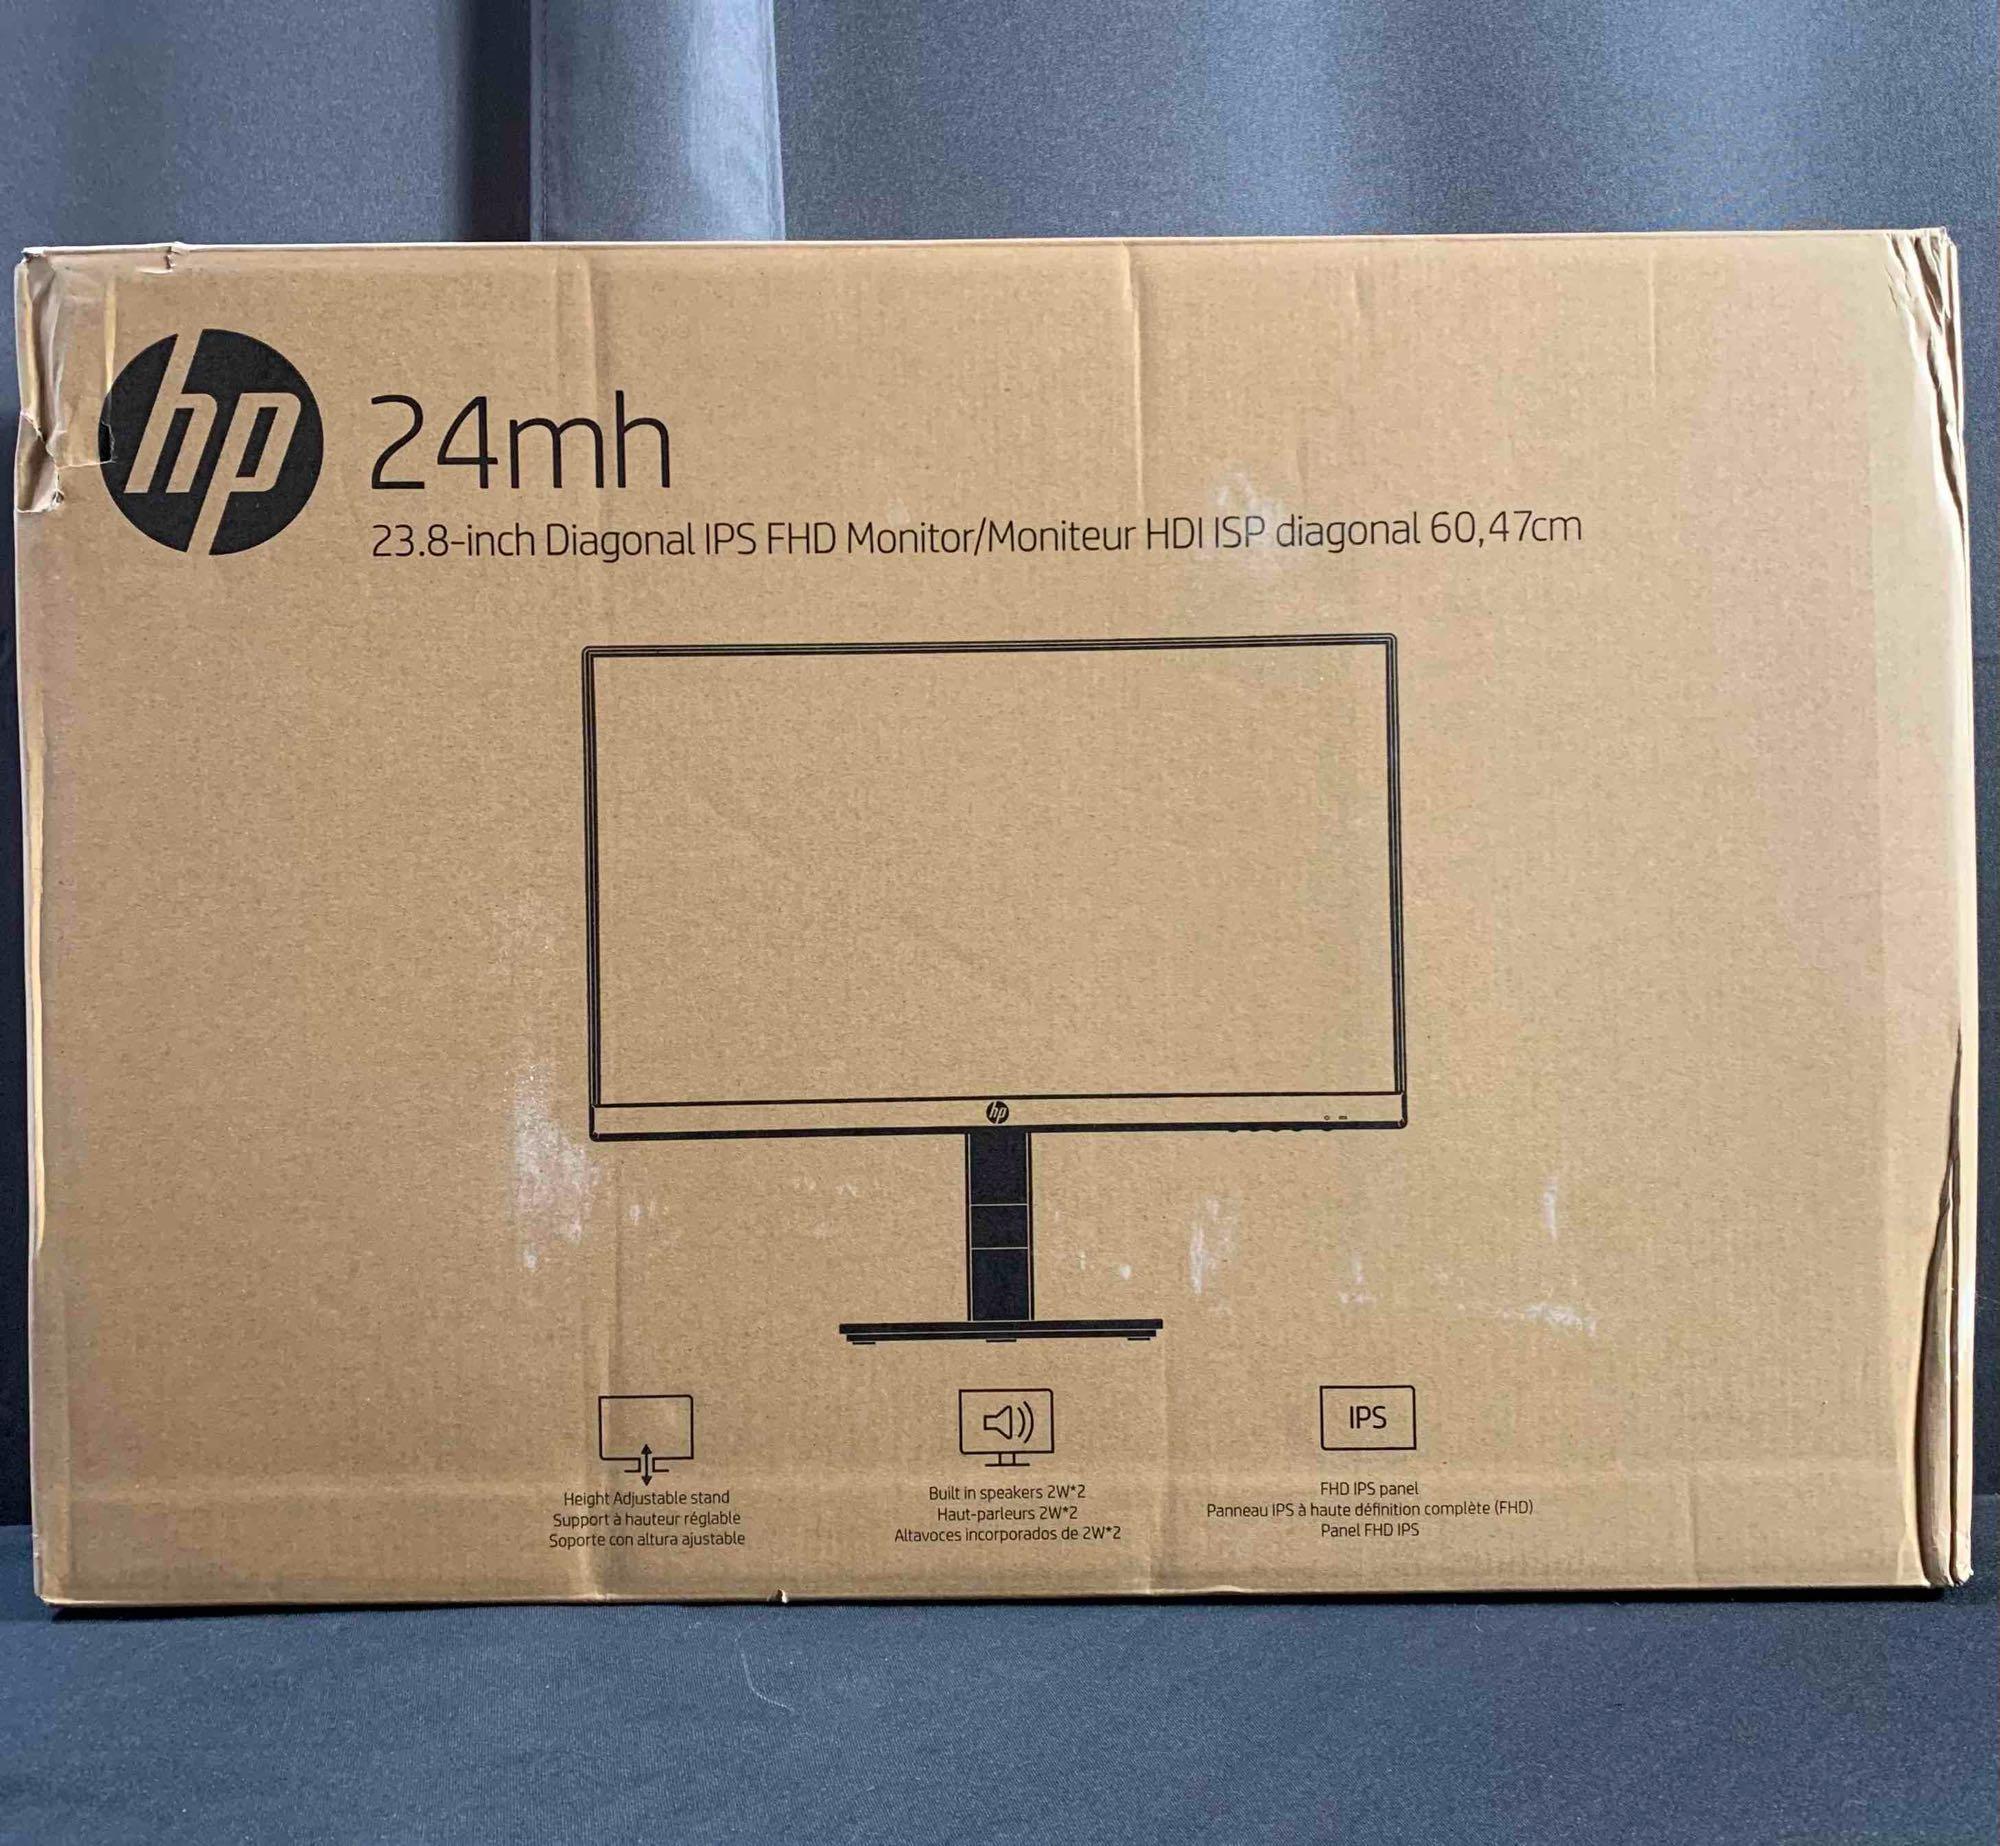 HP 24mh FHD Computer Monitor. 23.8-Inch